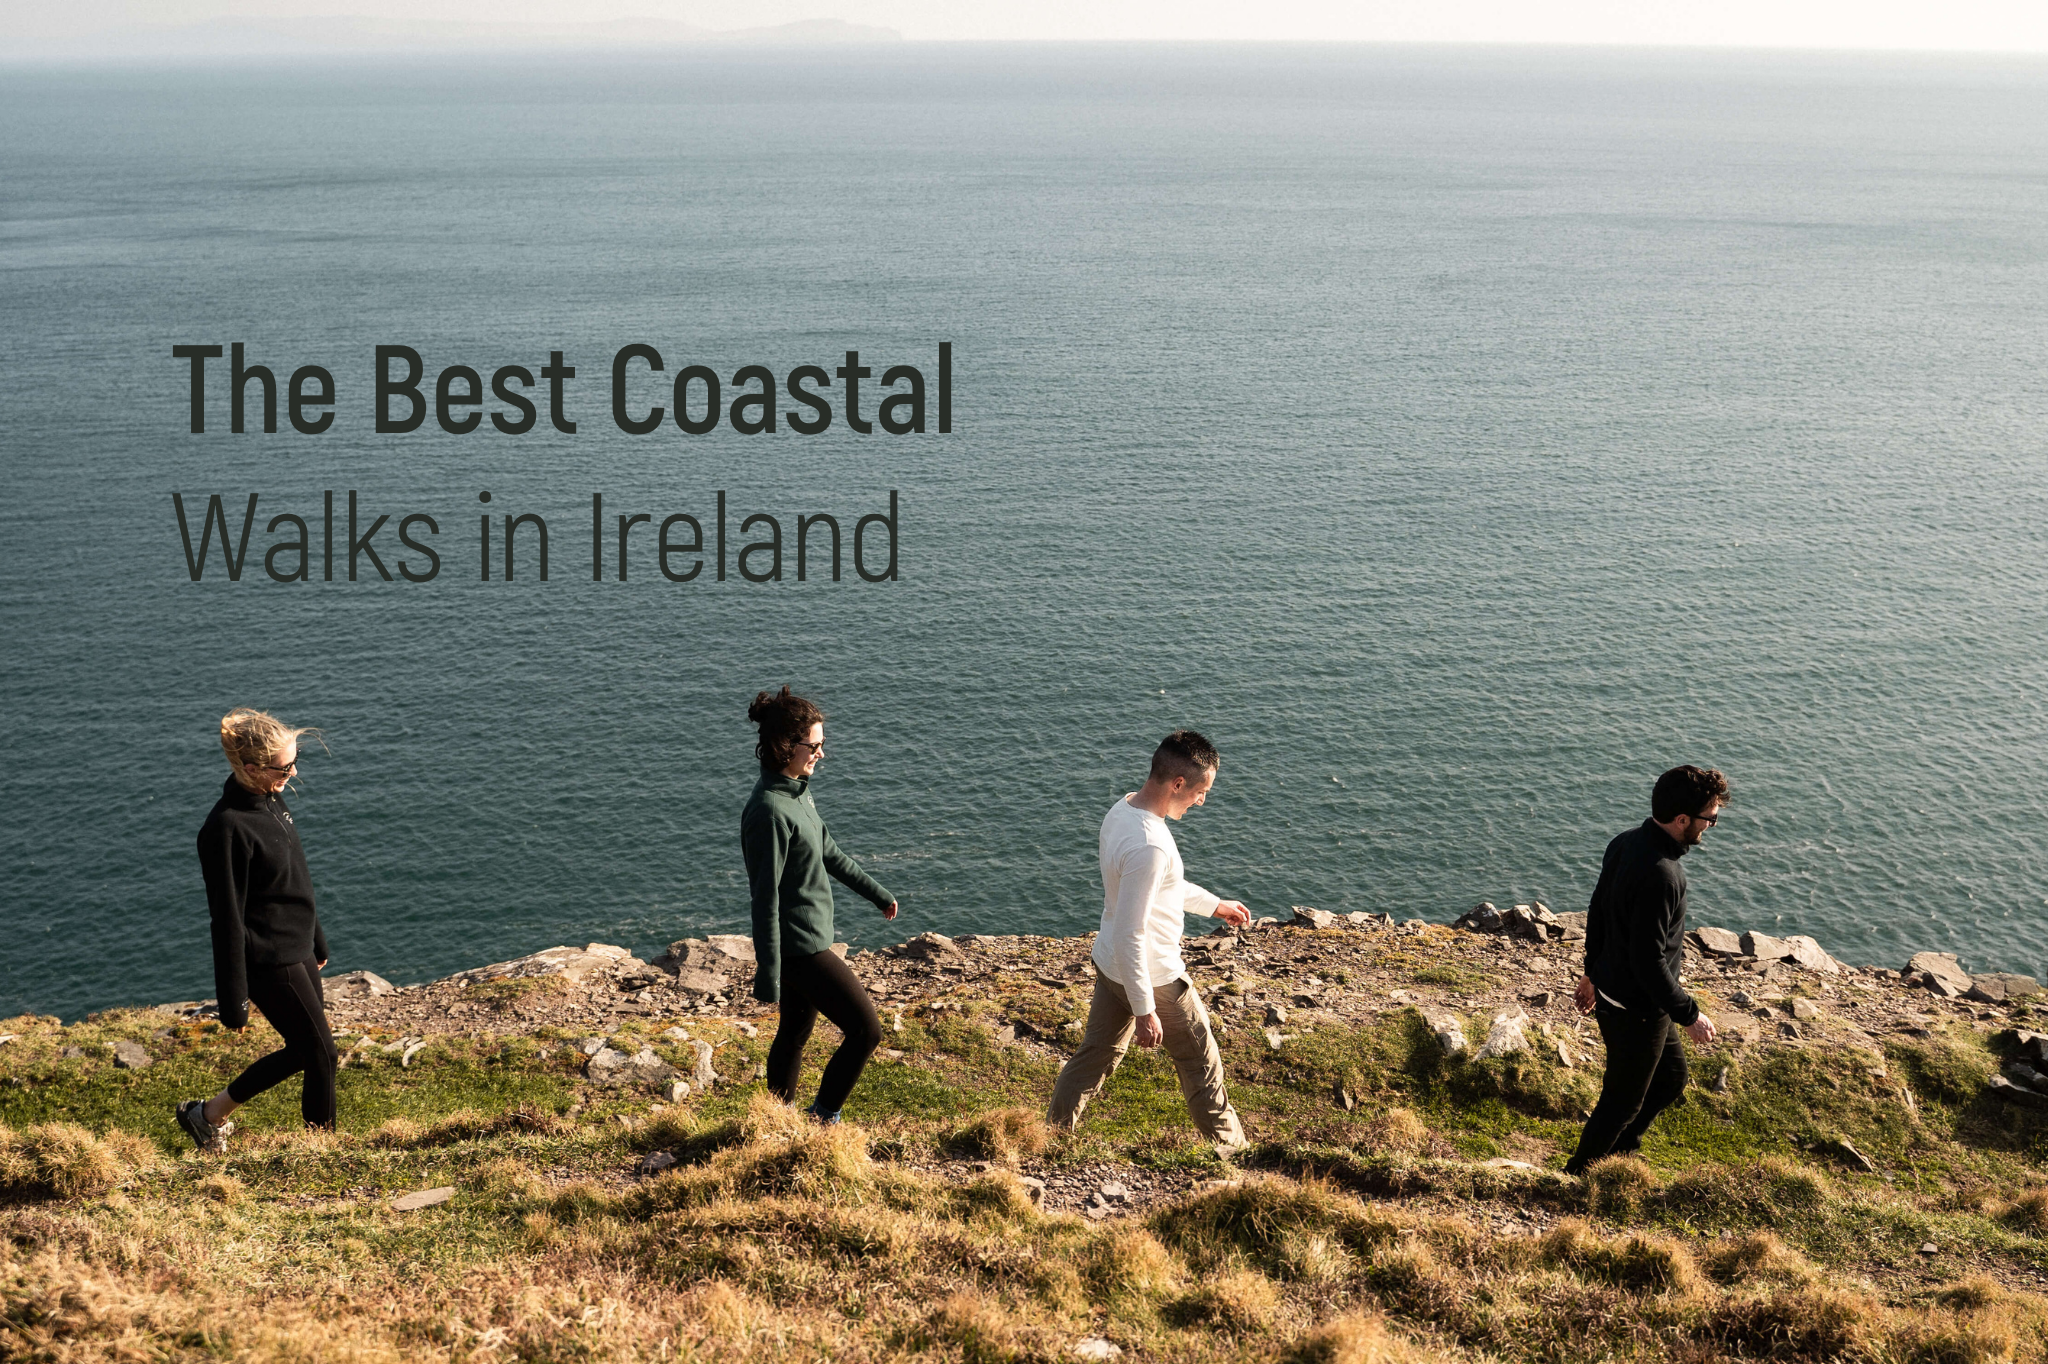 The Best Coastal Walks in Ireland